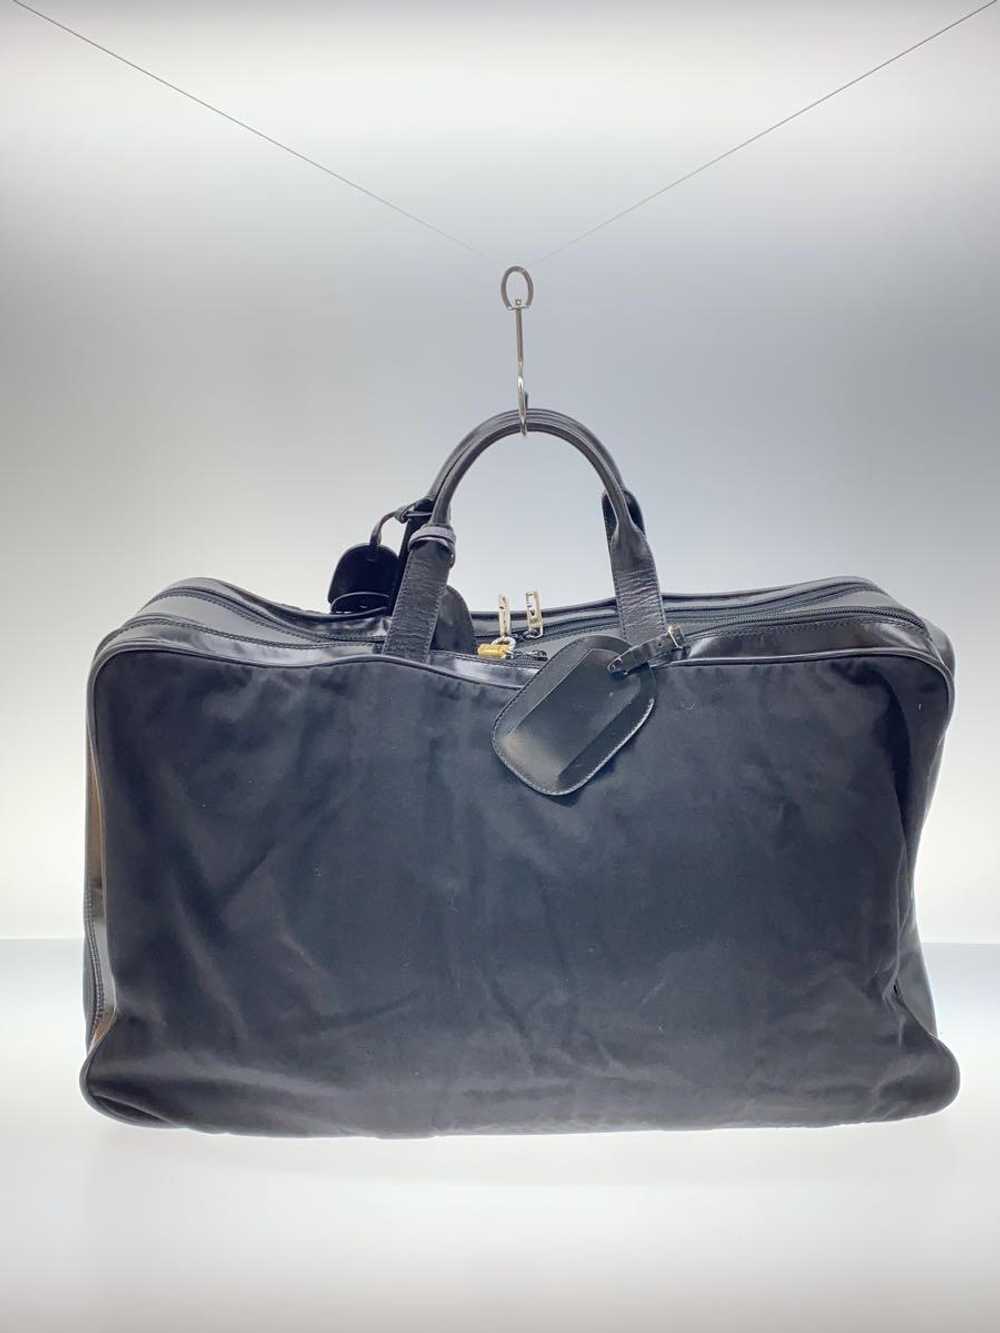 Used Gucci Boston Bag/Leather/Blk Bag - image 3